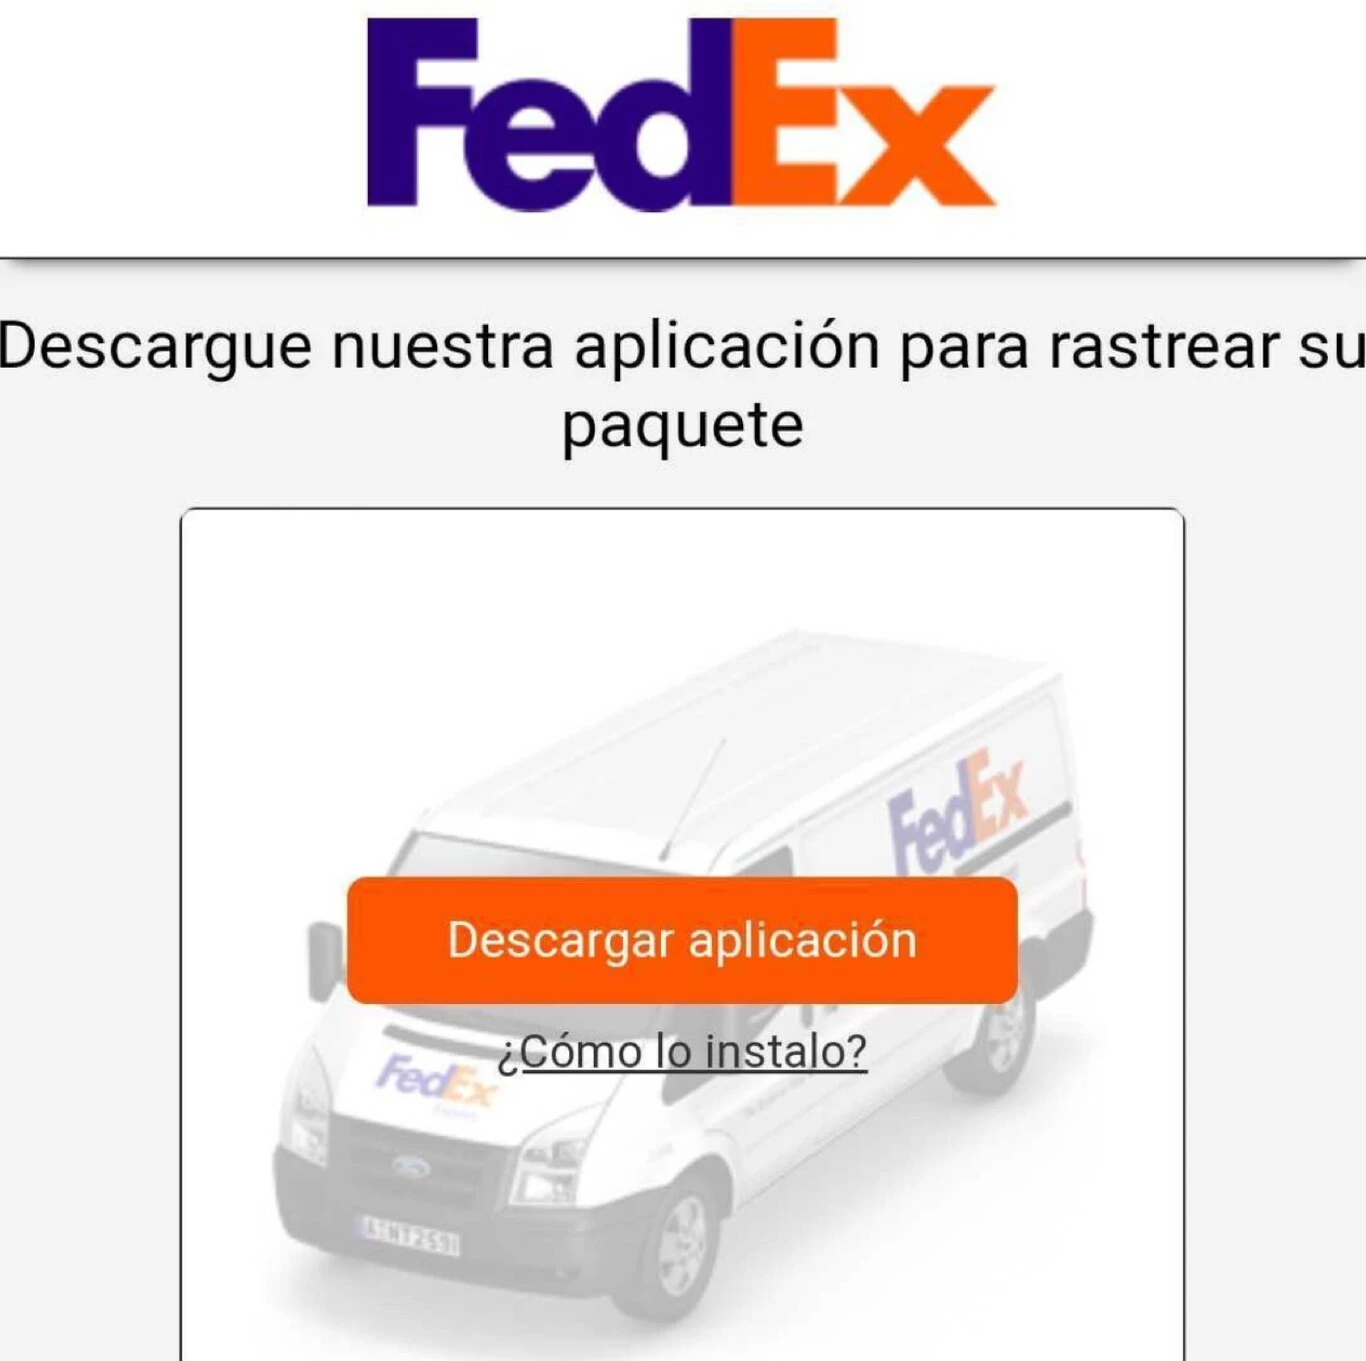 El falso SMS de Fedex